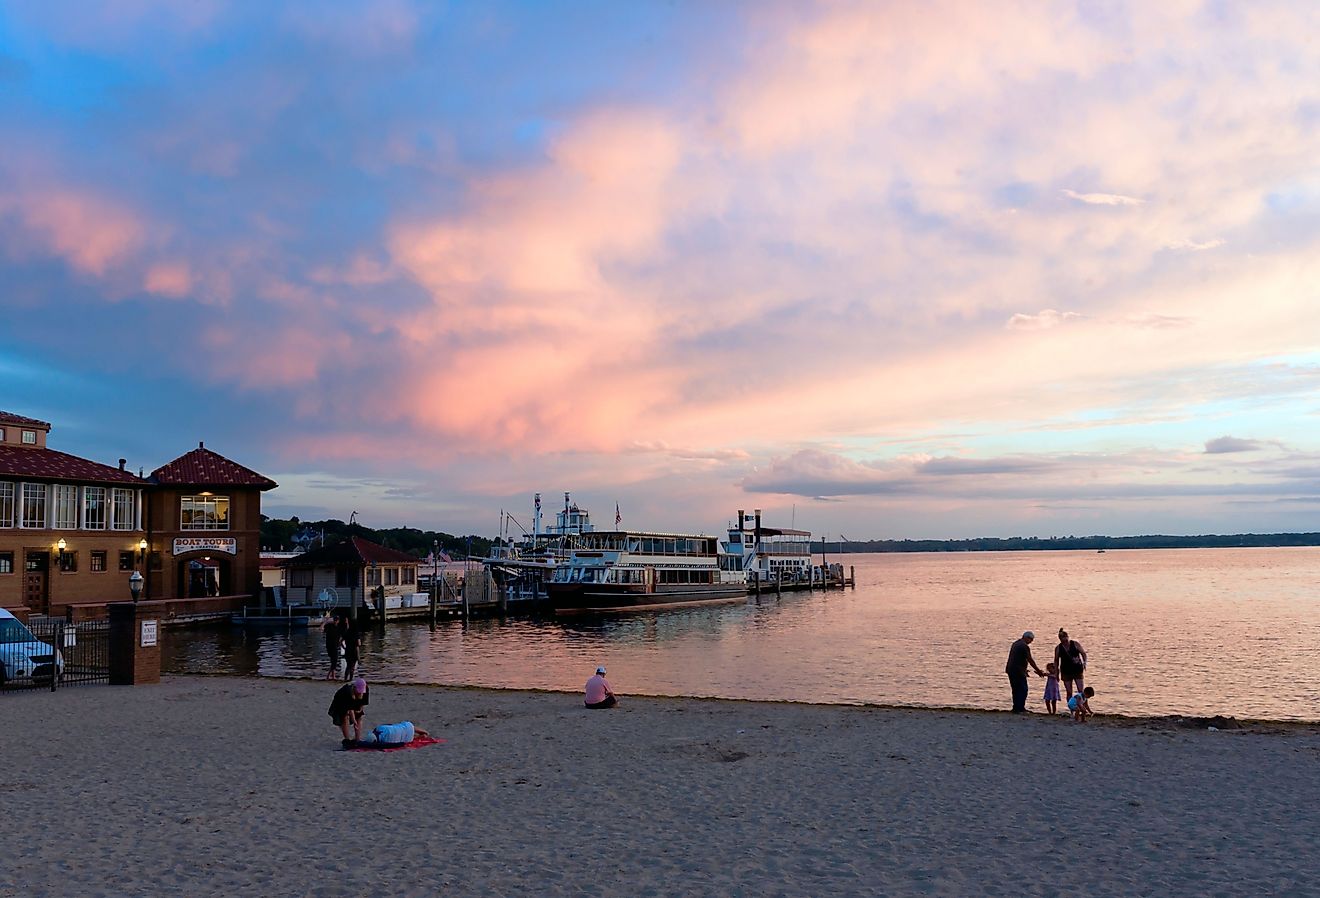 People gathering at the beach near Lake Geneva, Wisconsin. Image credit BetoVM via Shutterstock.